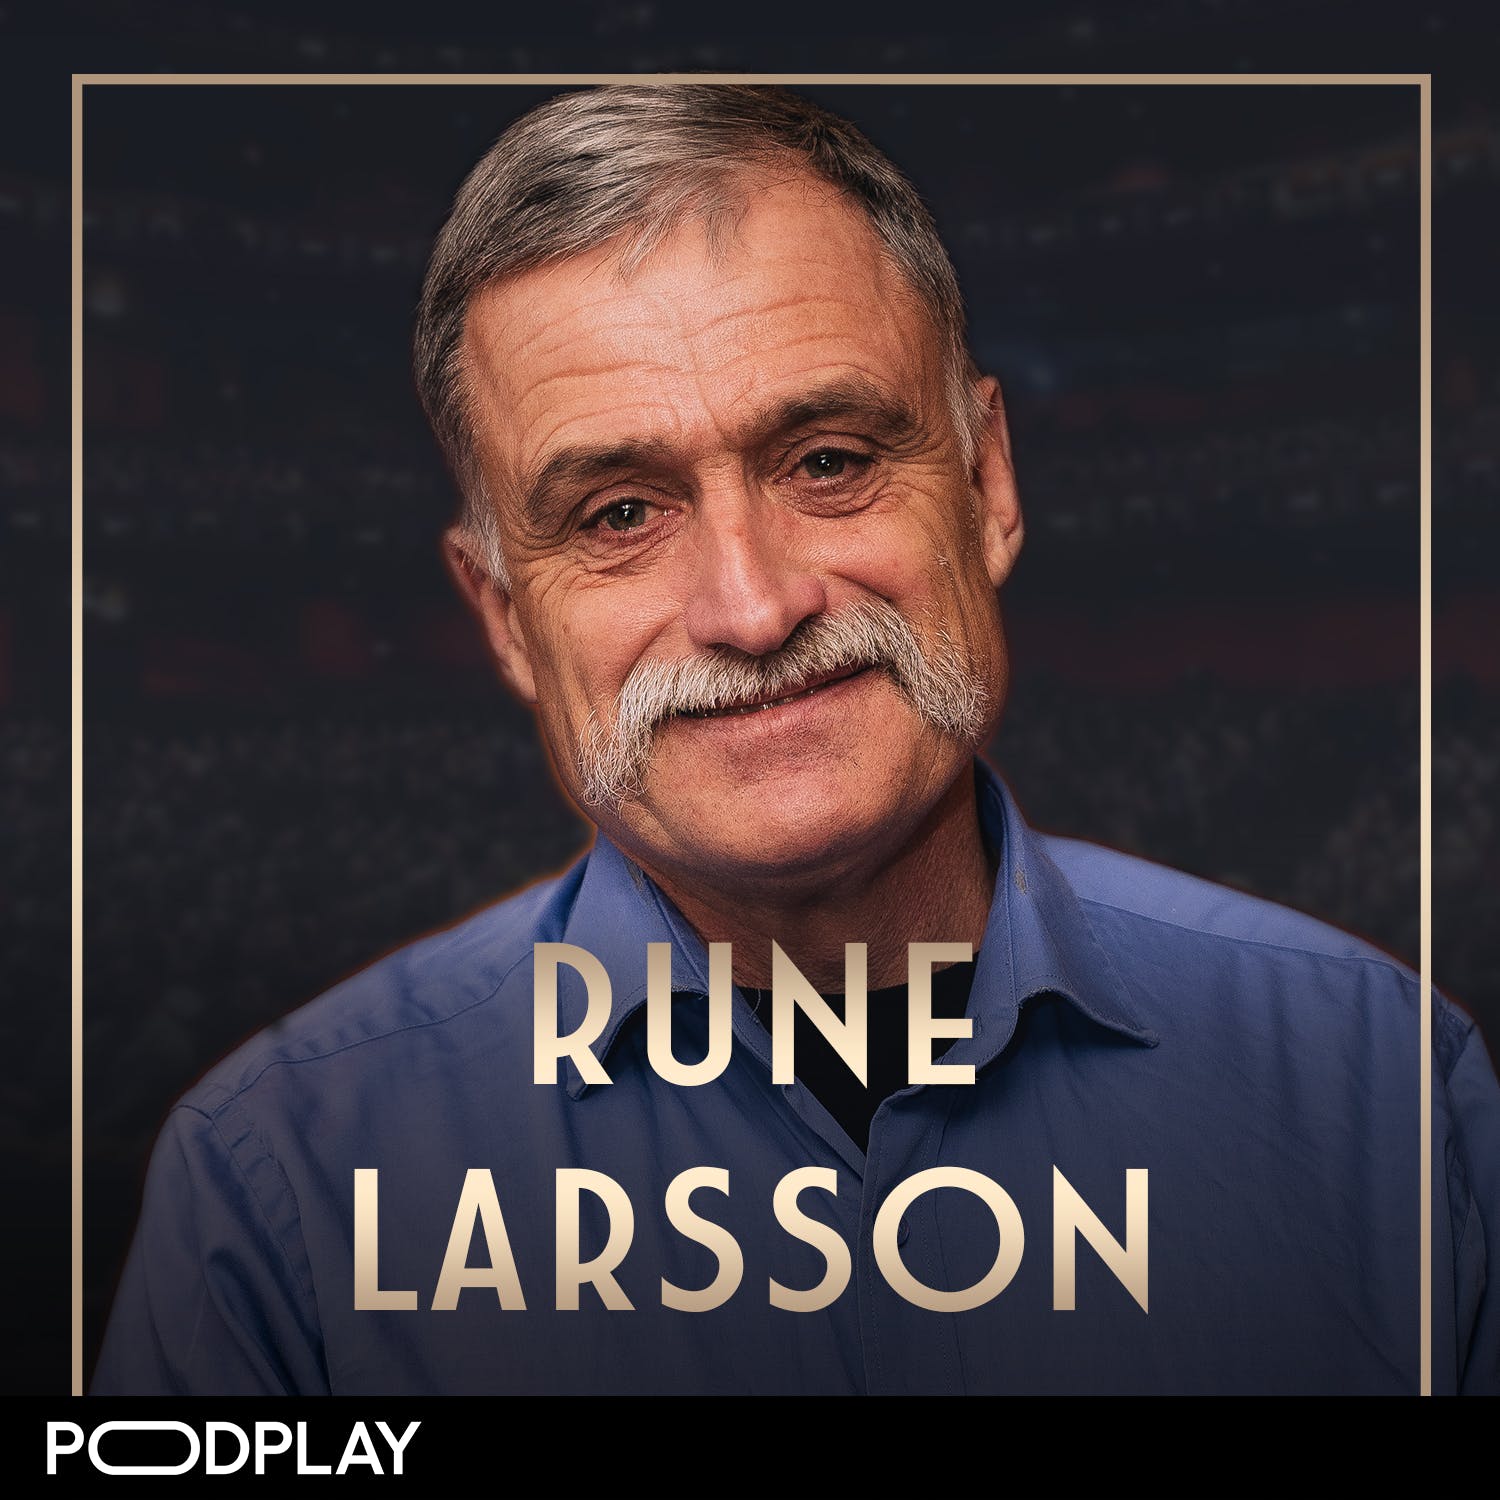 365. Rune Larsson  - "Sveriges uthålligaste man", Original